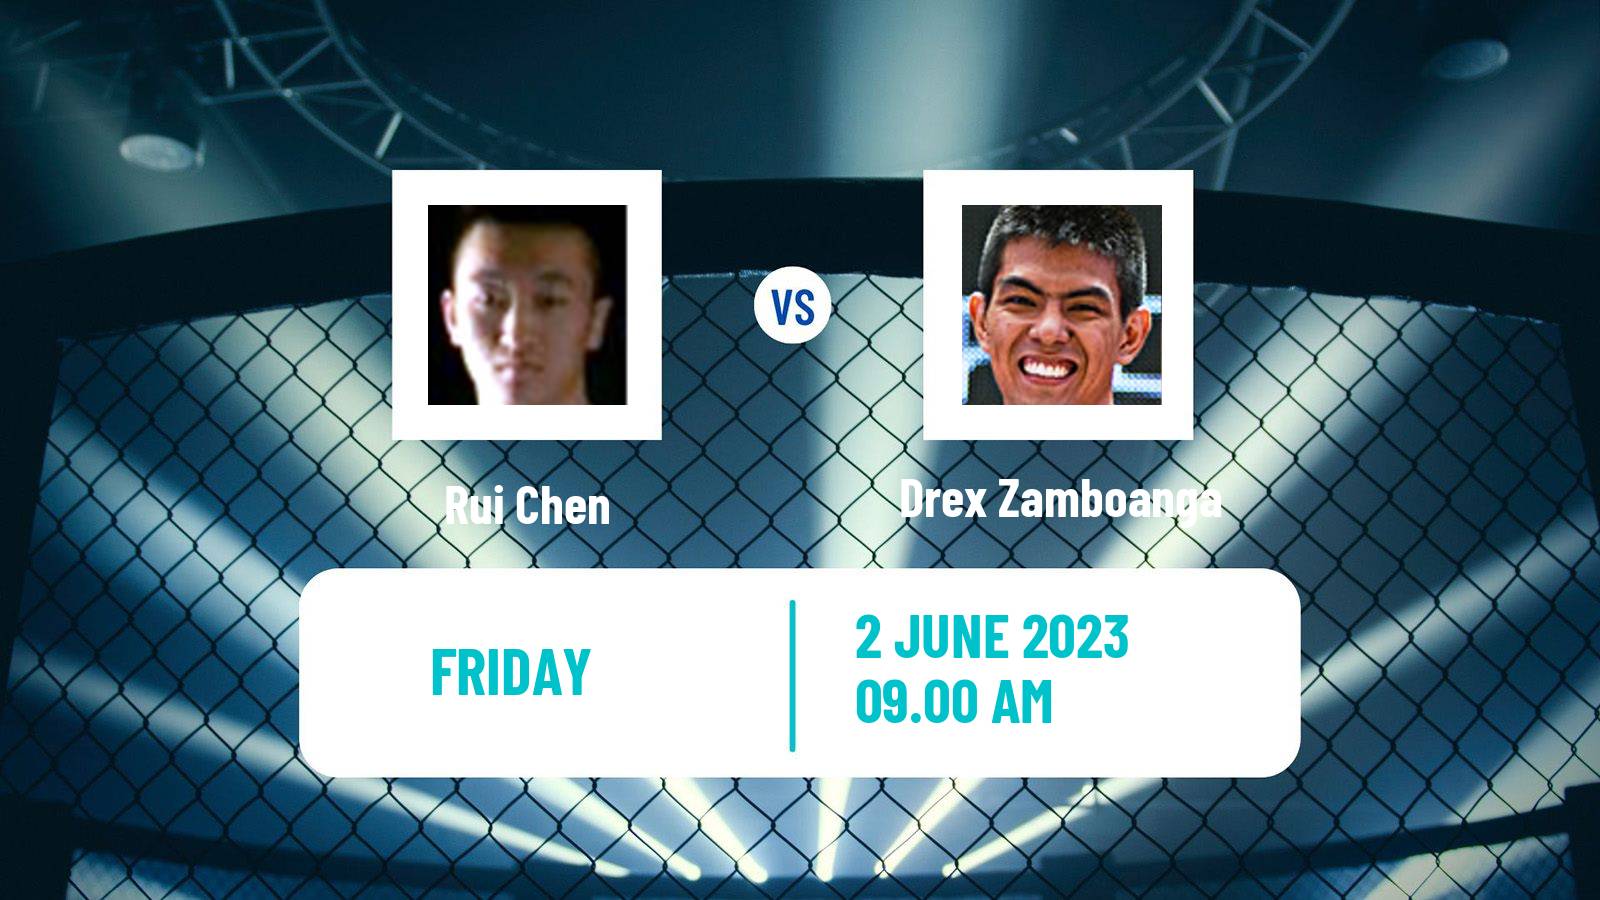 MMA Bantamweight One Championship Men Rui Chen - Drex Zamboanga